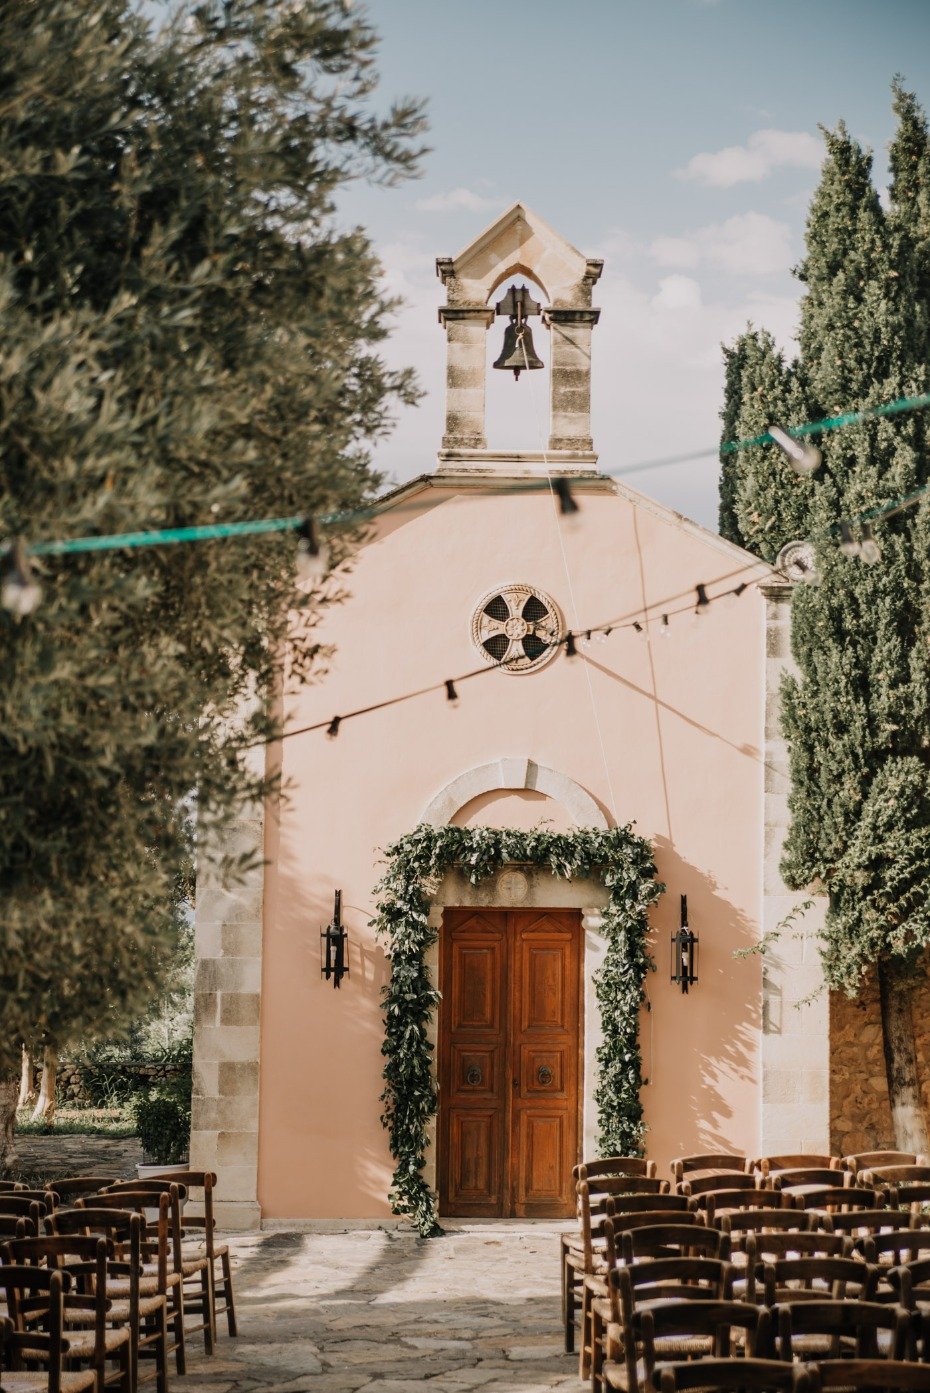 Chapel wedding in Crete